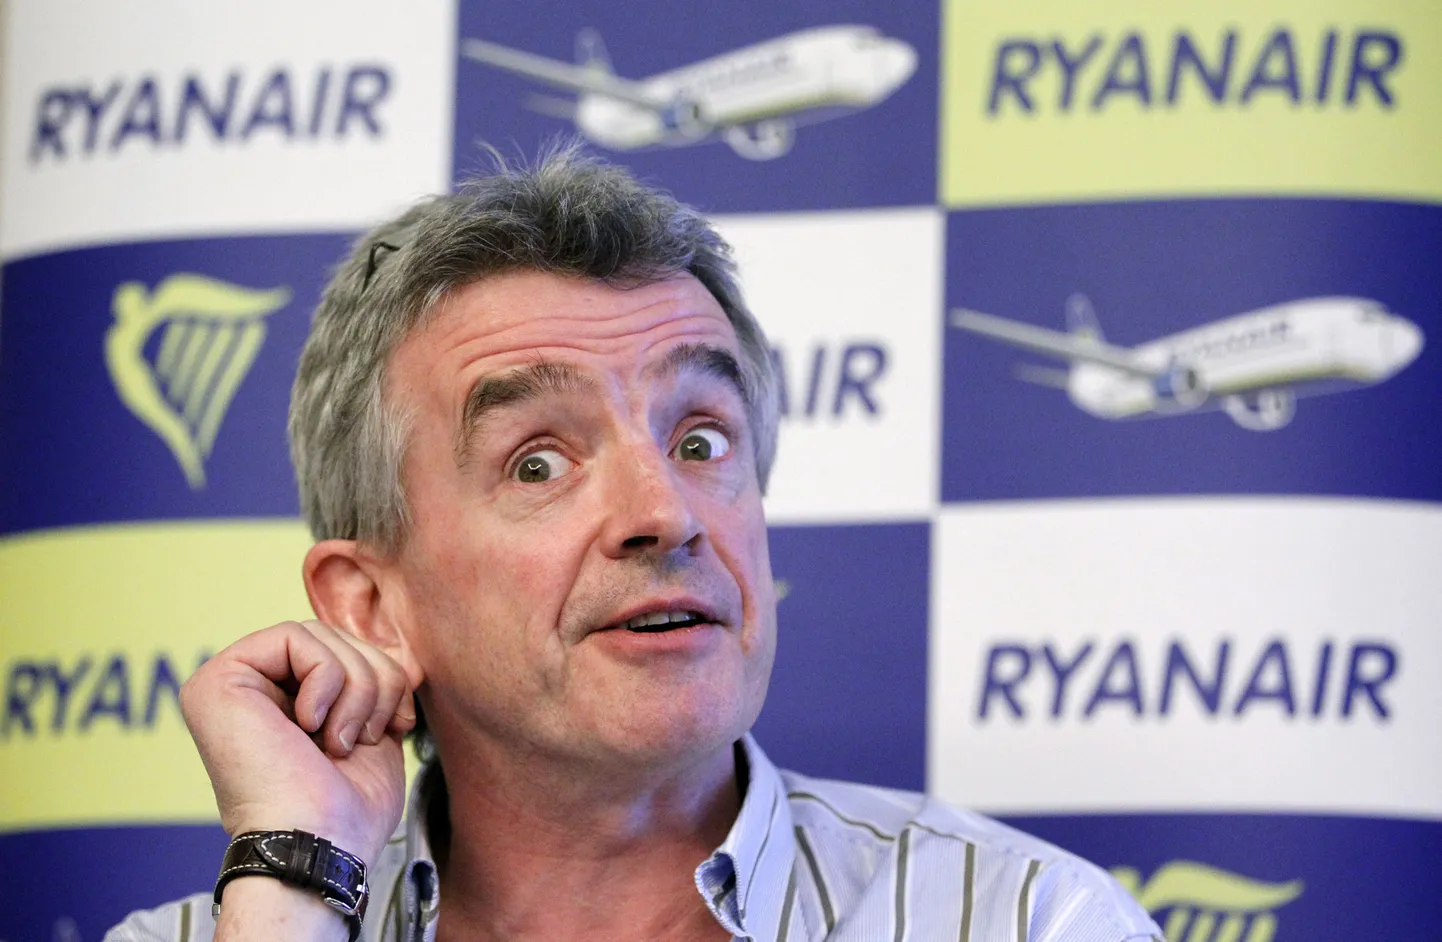 Ryanairi juht Michael O'Leary